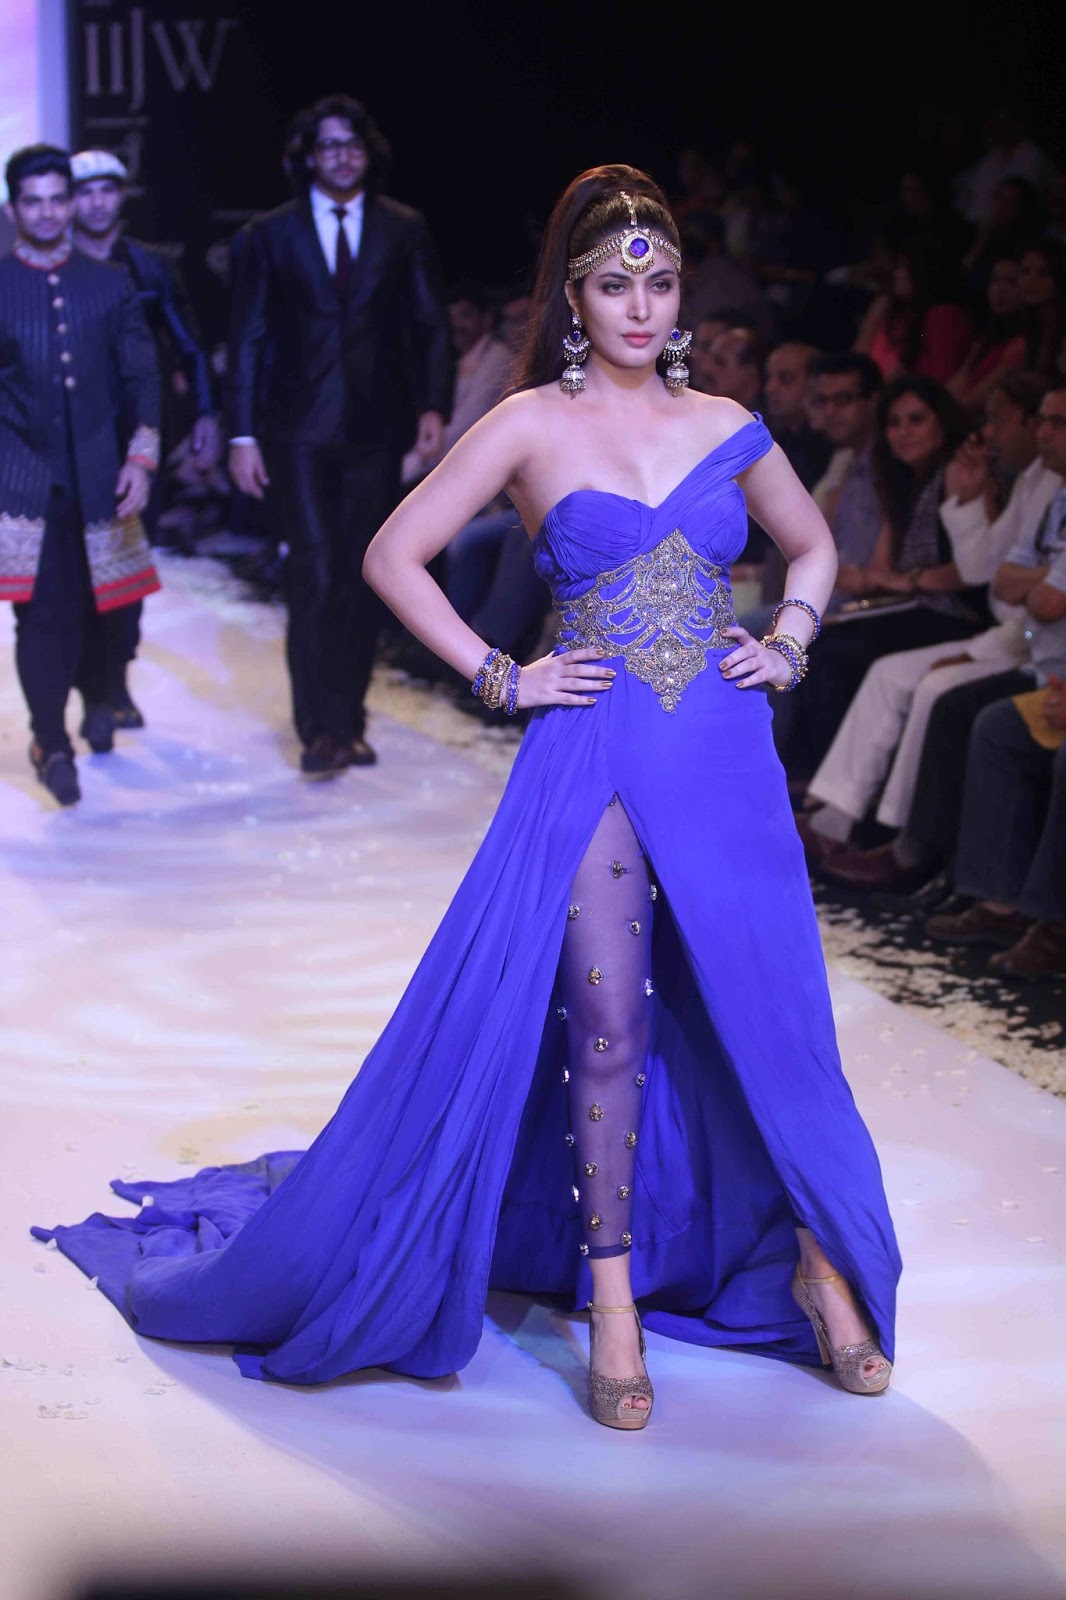 High Quality Bollywood Celebrity Pictures Ankita Shorey Nip Slip In Blue Dress At Gitanjali